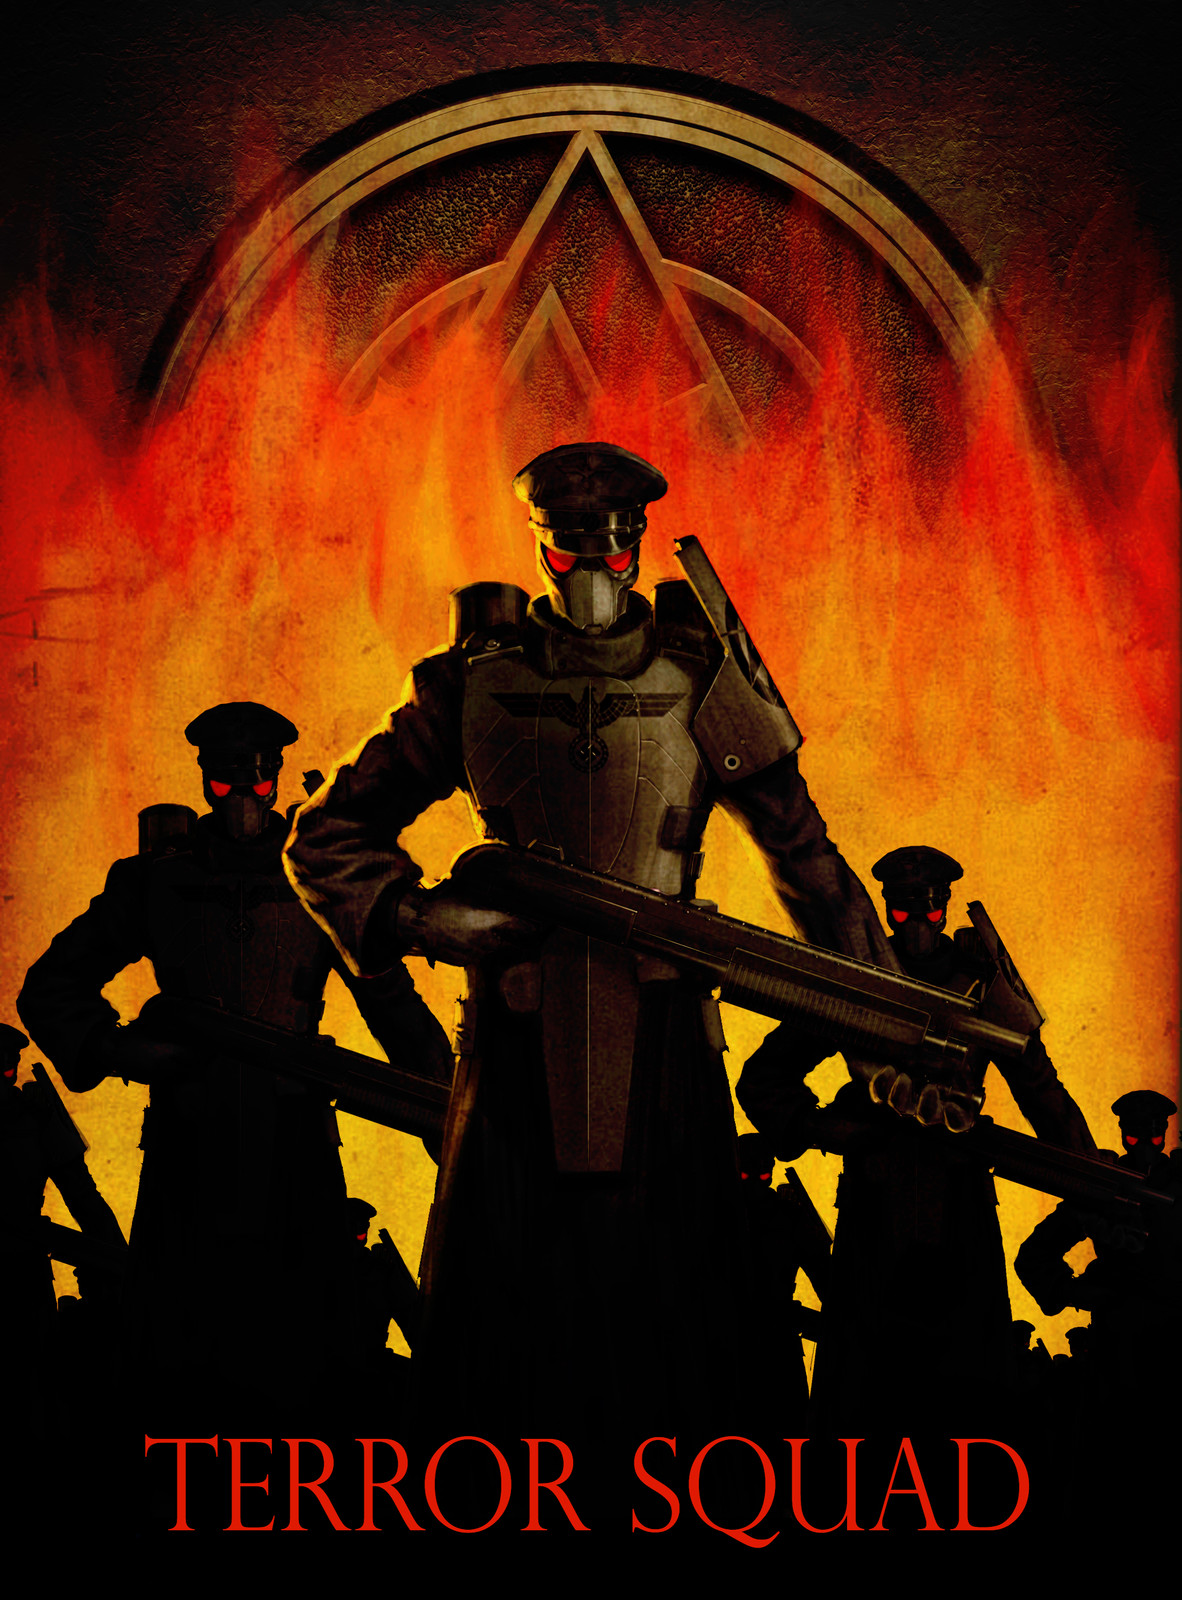 Nazi Shock troopers propaganda poster